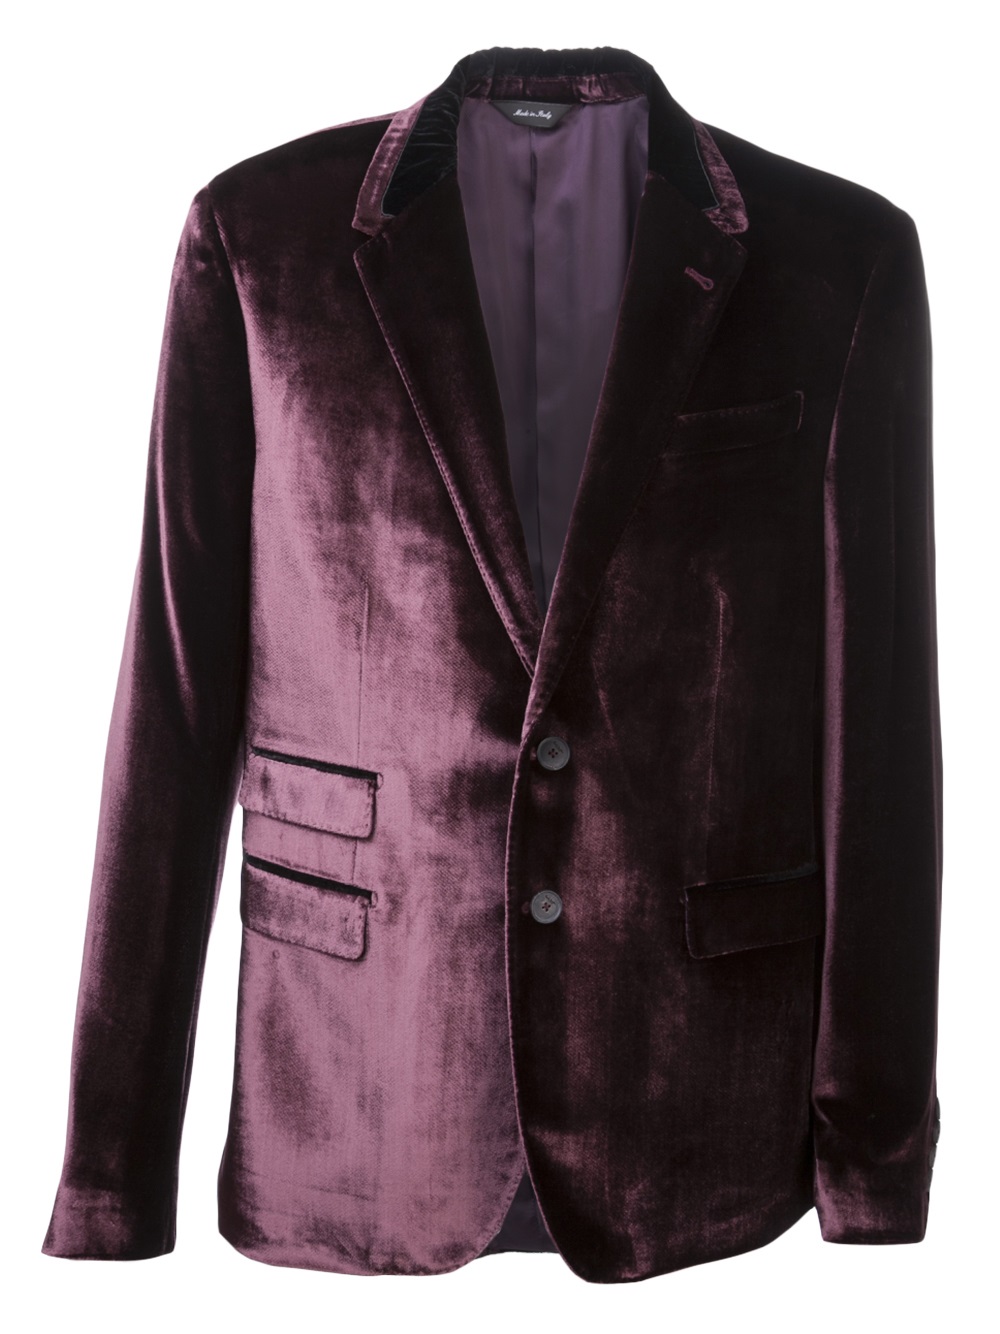 Paul Smith Gents Tailored Fit Velvet Blazer in Purple for Men - Lyst